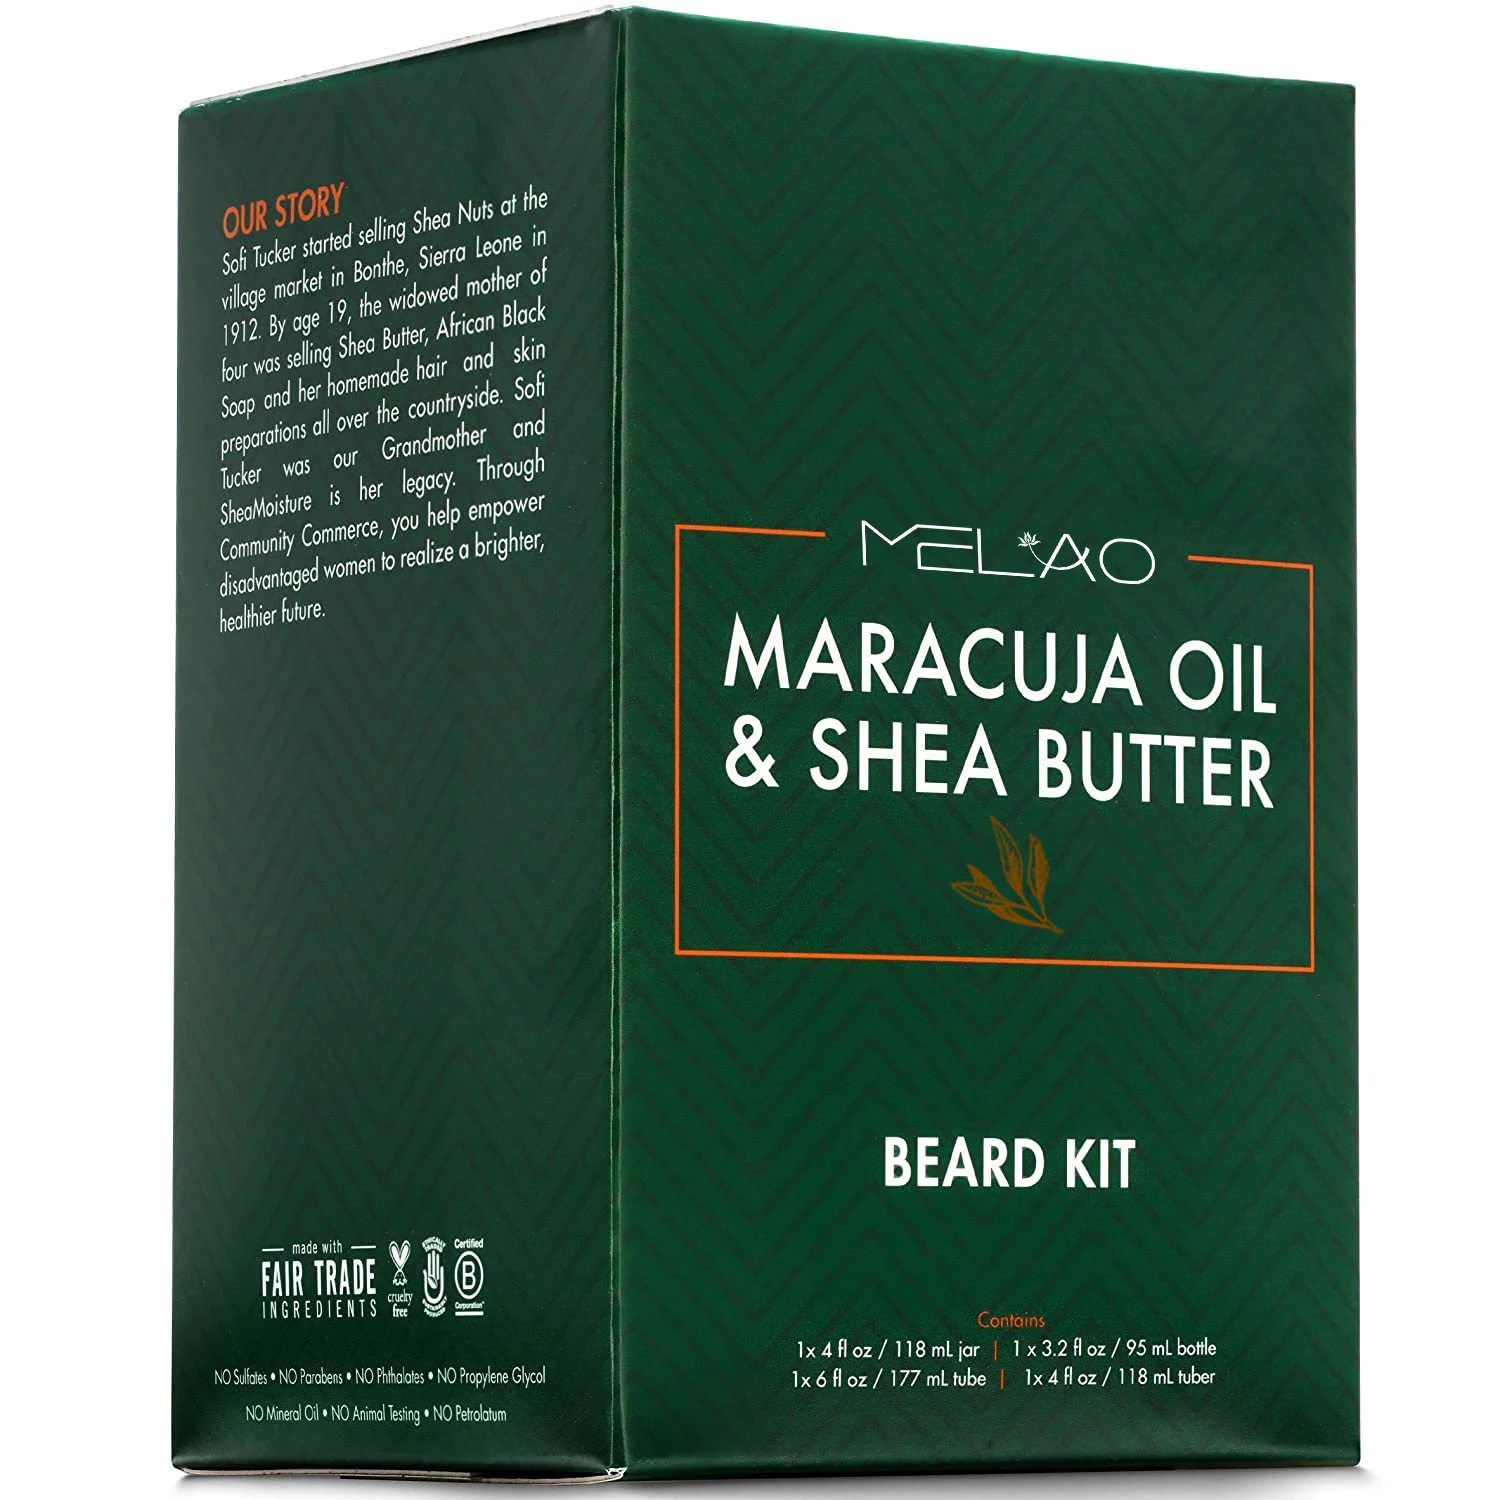 Beard set For men beard shaping tool Care Shampoo And Conditioner Perfect Facial Hair Beard grooming kit for men